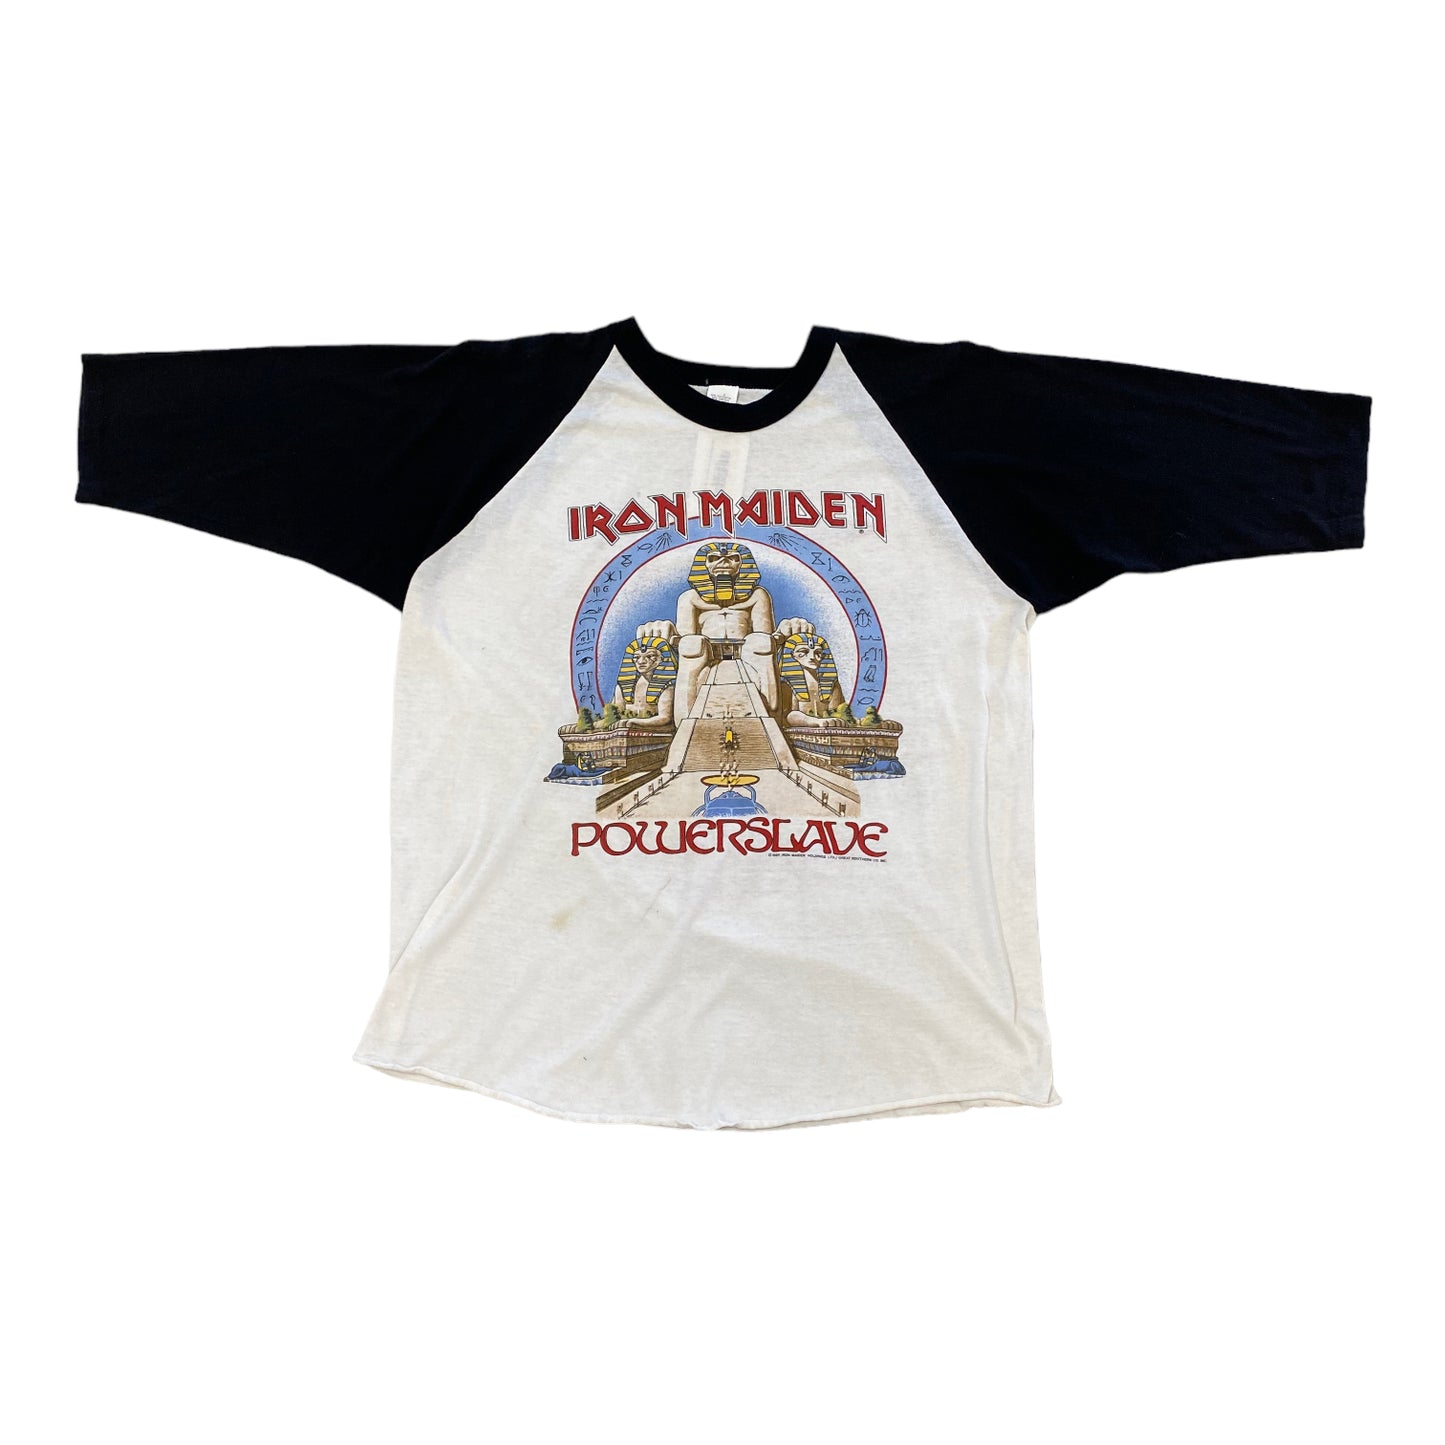 1984 Iron Maiden Vintage Band Shirt Baseball Tee